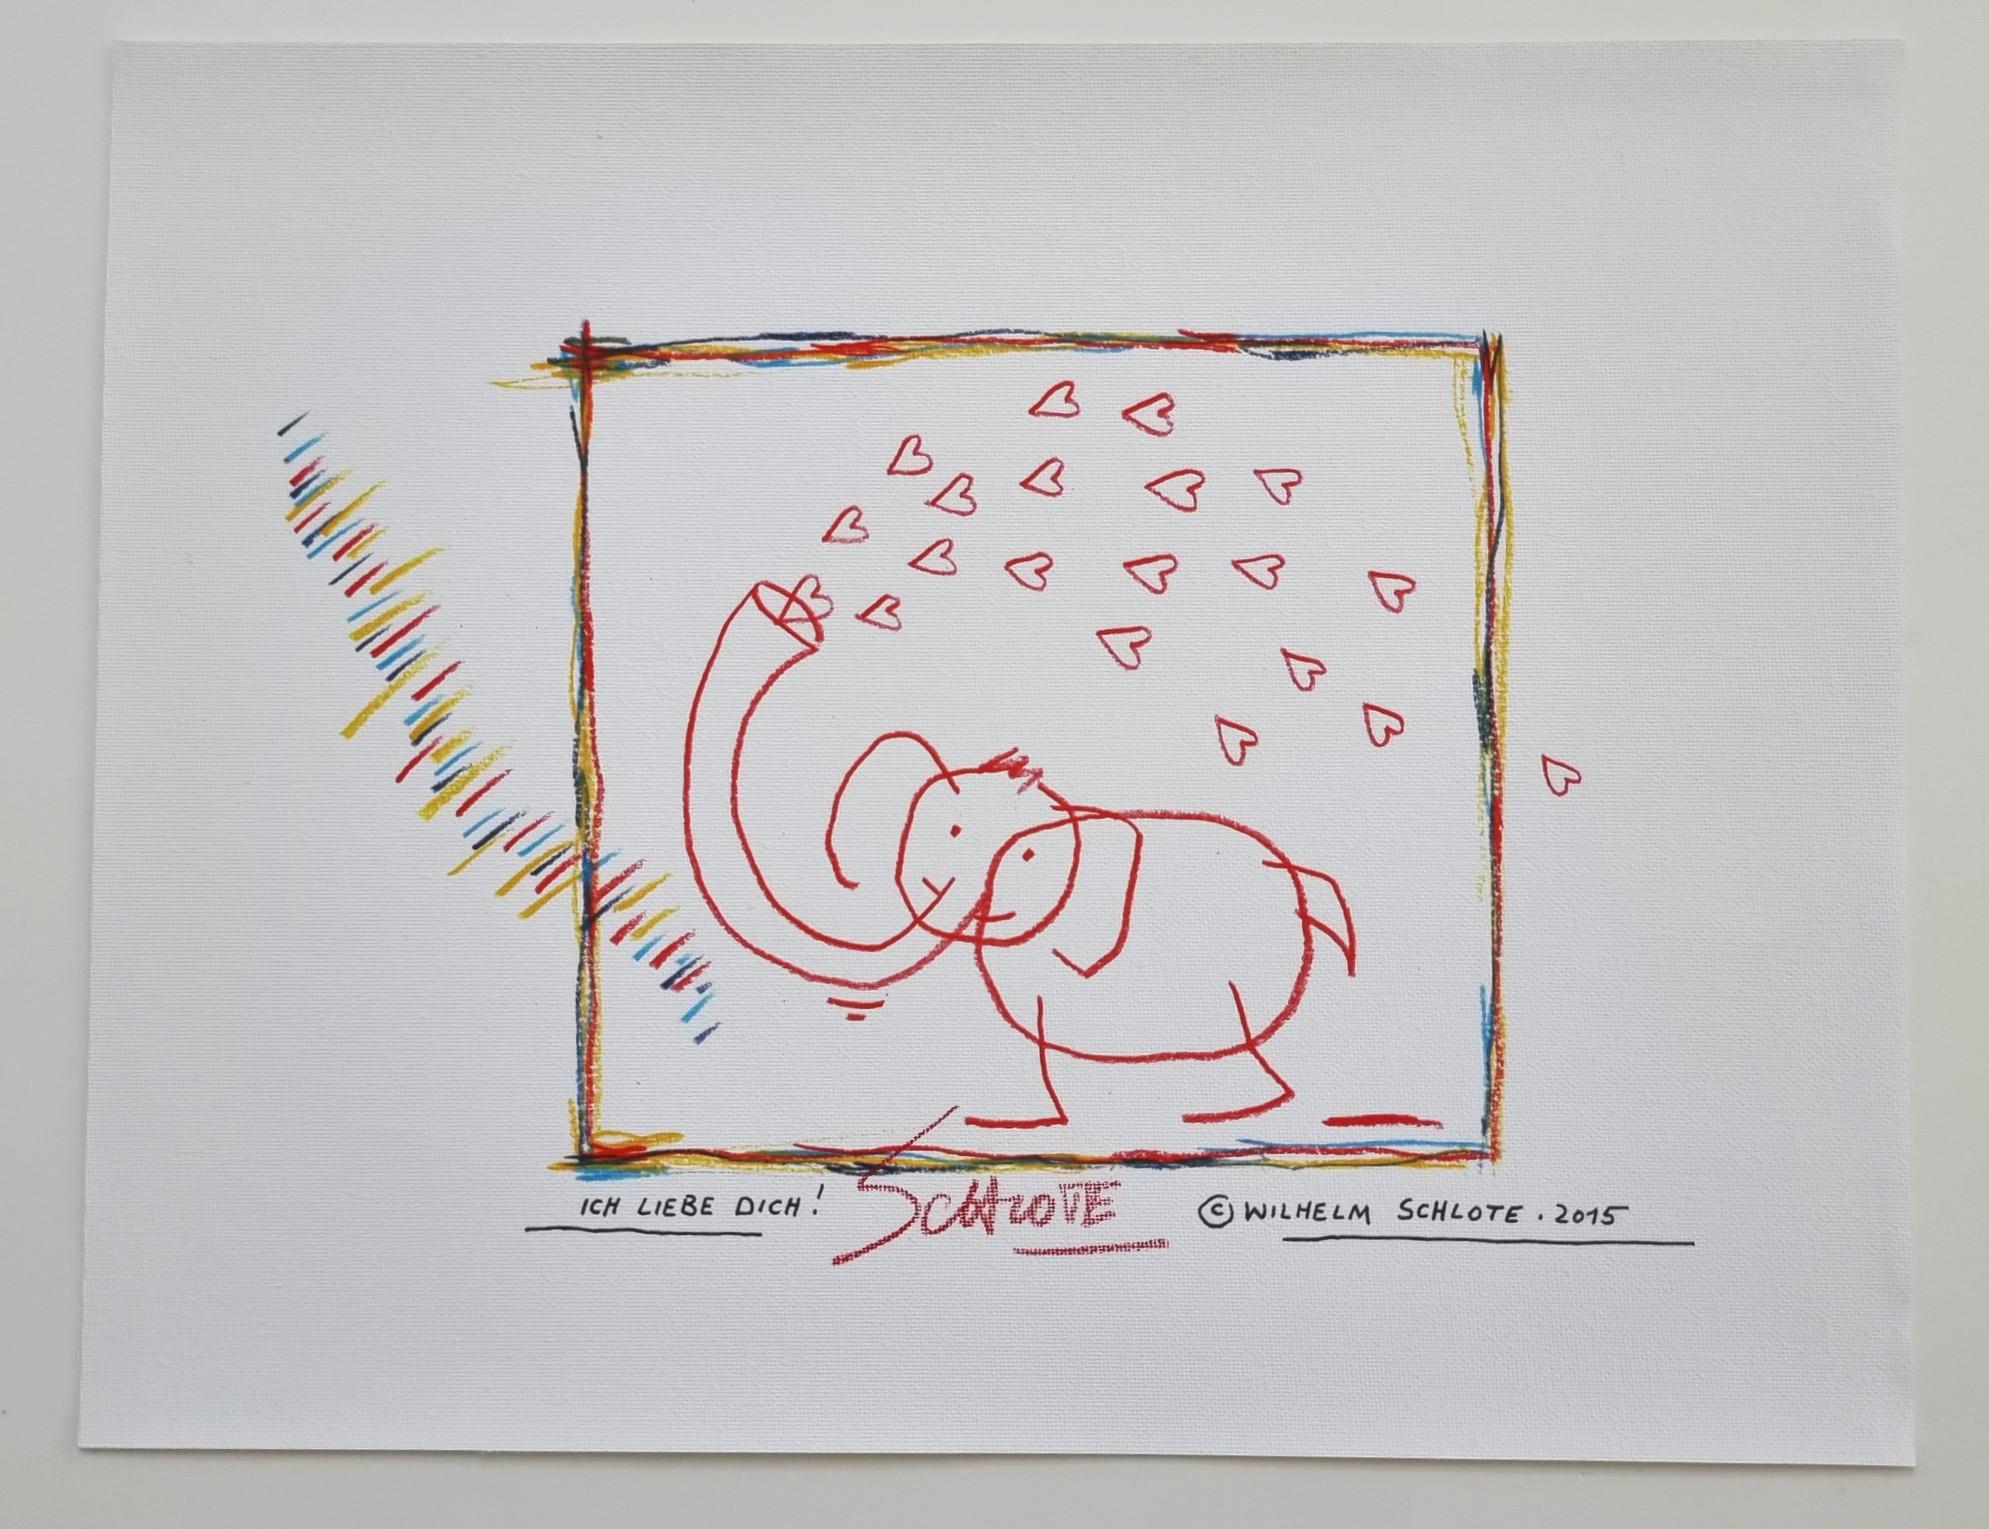 Wilhelm Schlote Figurative Print - I love you (Stick Figure Art, Hearts, Elephant, Playful, Warm, Heartfelt)